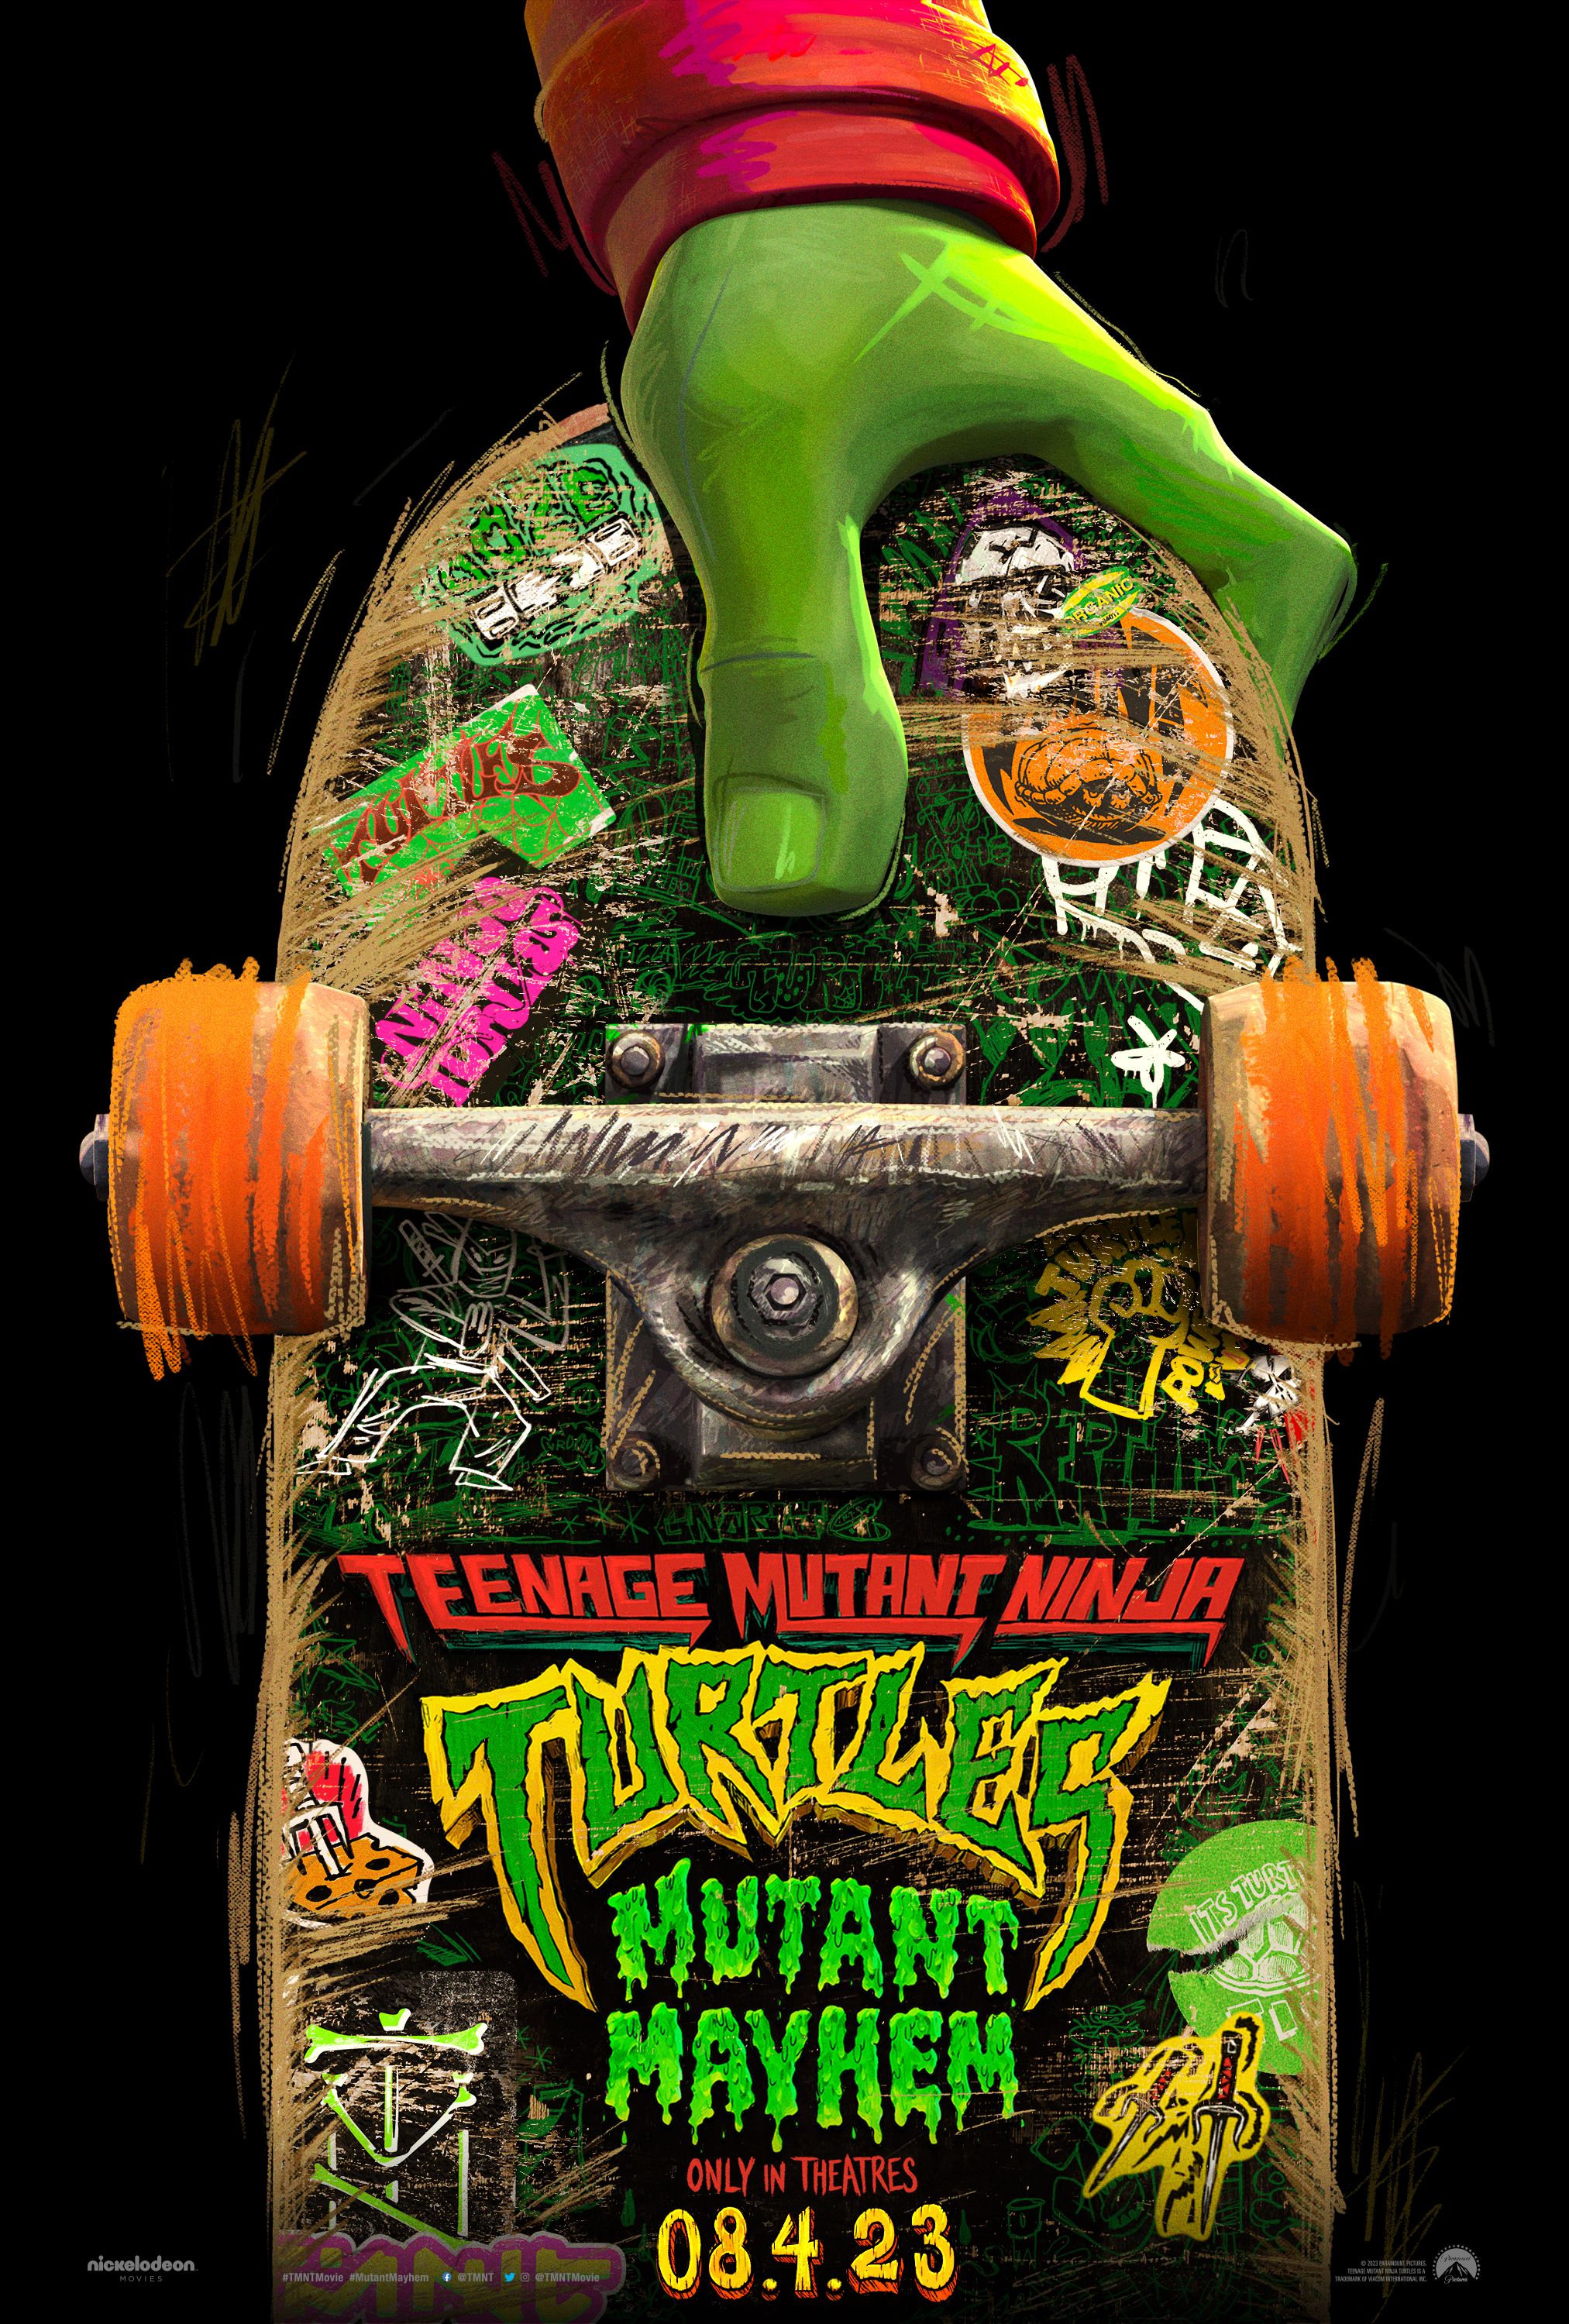 TMNT movies: Where to watch, how to stream every Teenage Mutant Ninja  Turtles movie - DraftKings Network